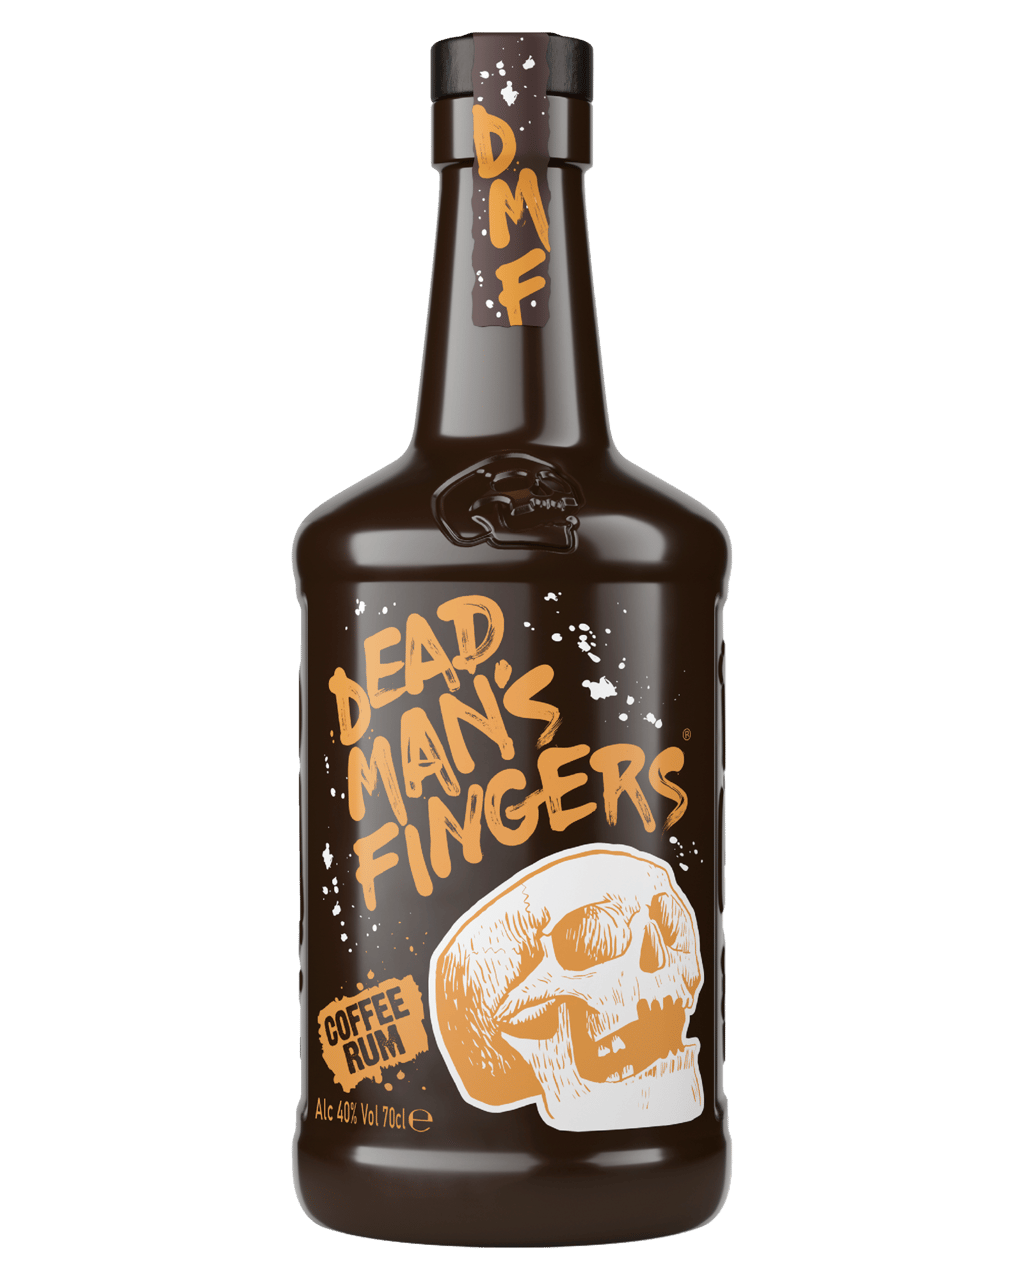 Buy Dead Man's Fingers Coffee Rum 700ml Online (Lowest Price Guarantee ...